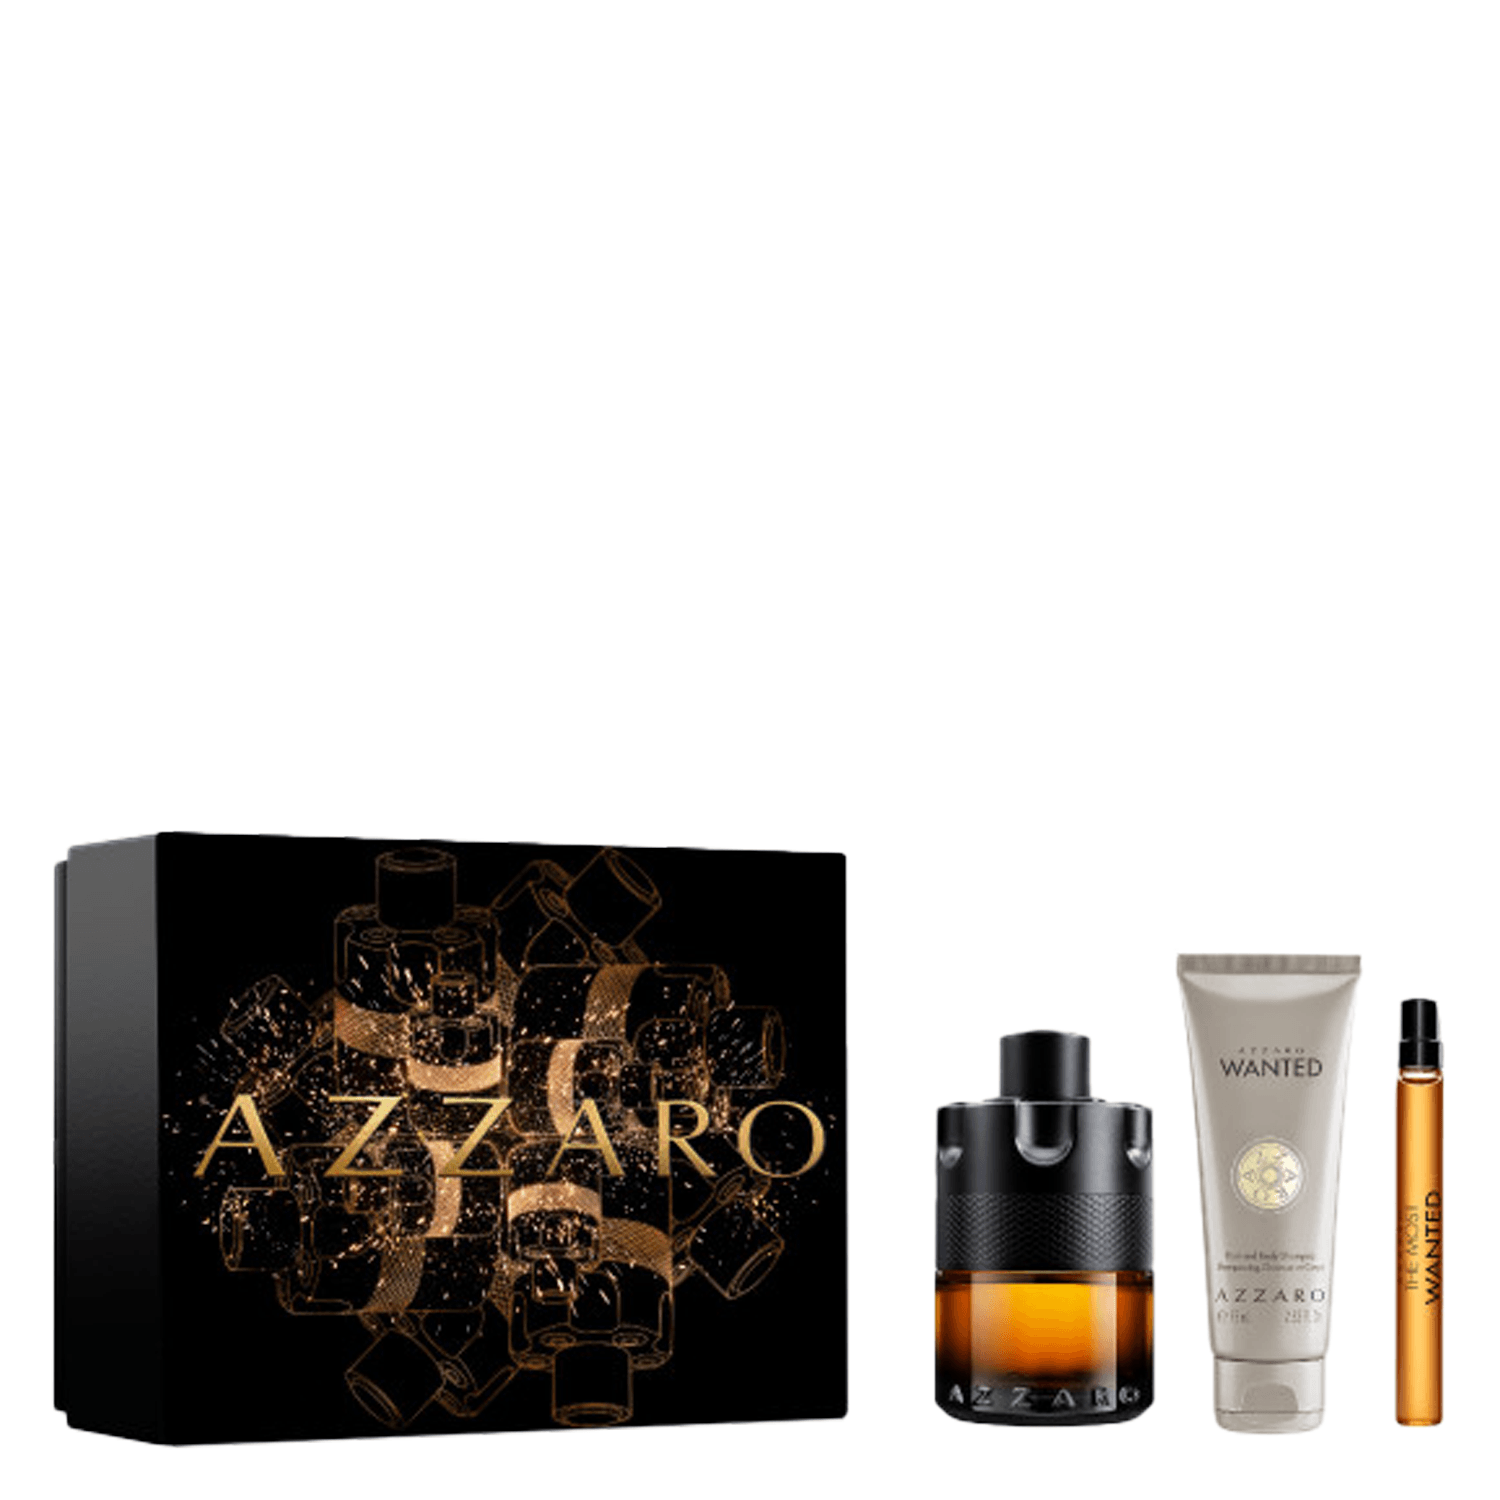 Produktbild von Azzaro Wanted - The Most Wanted Le Parfum Set